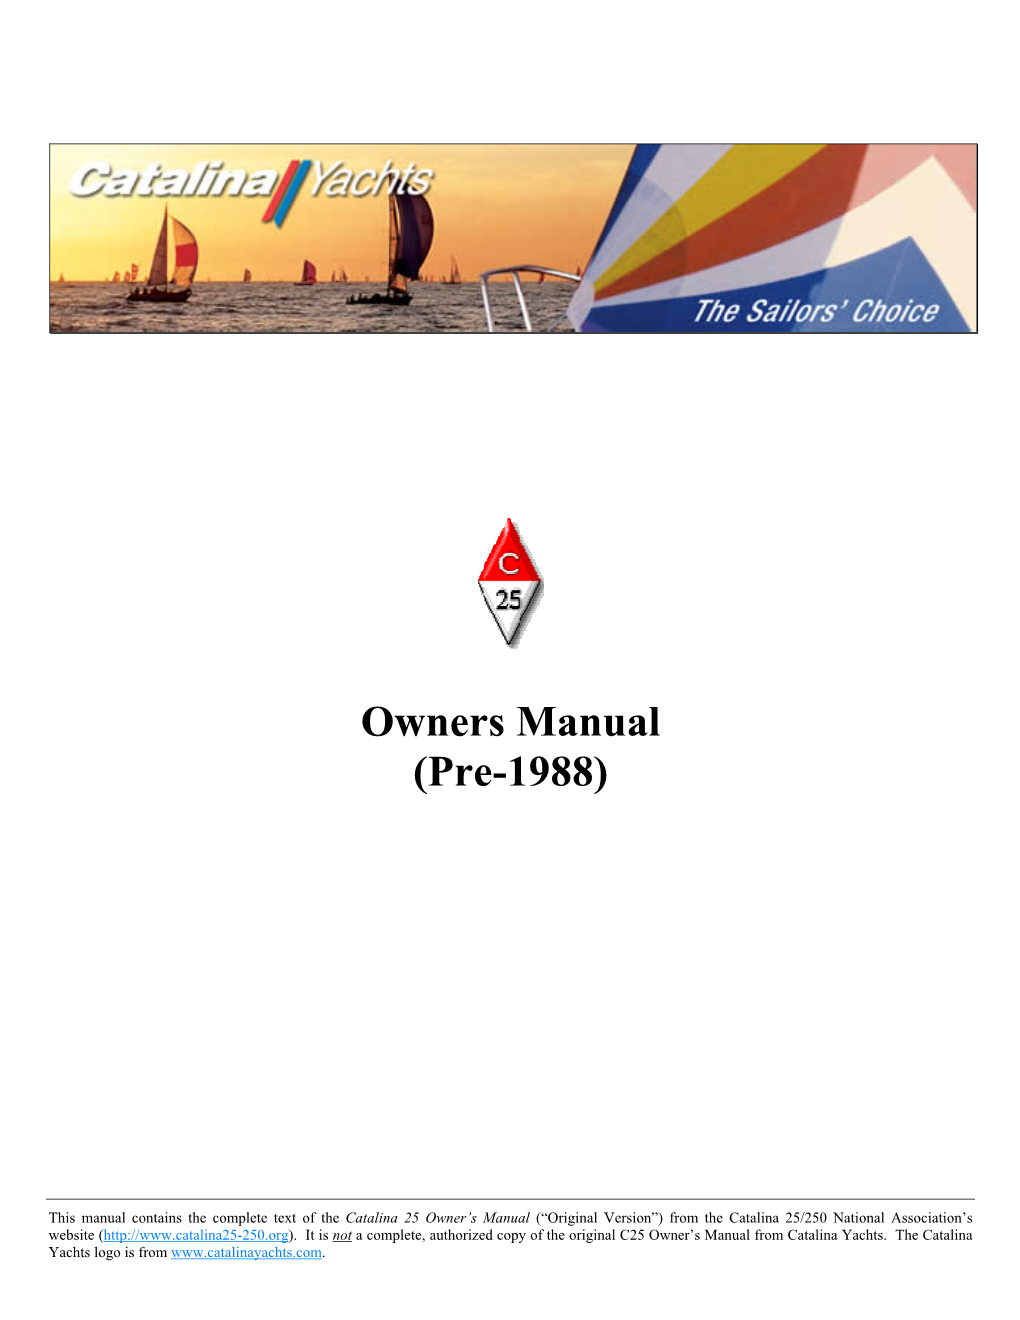 Owners Manual (Pre-1988)